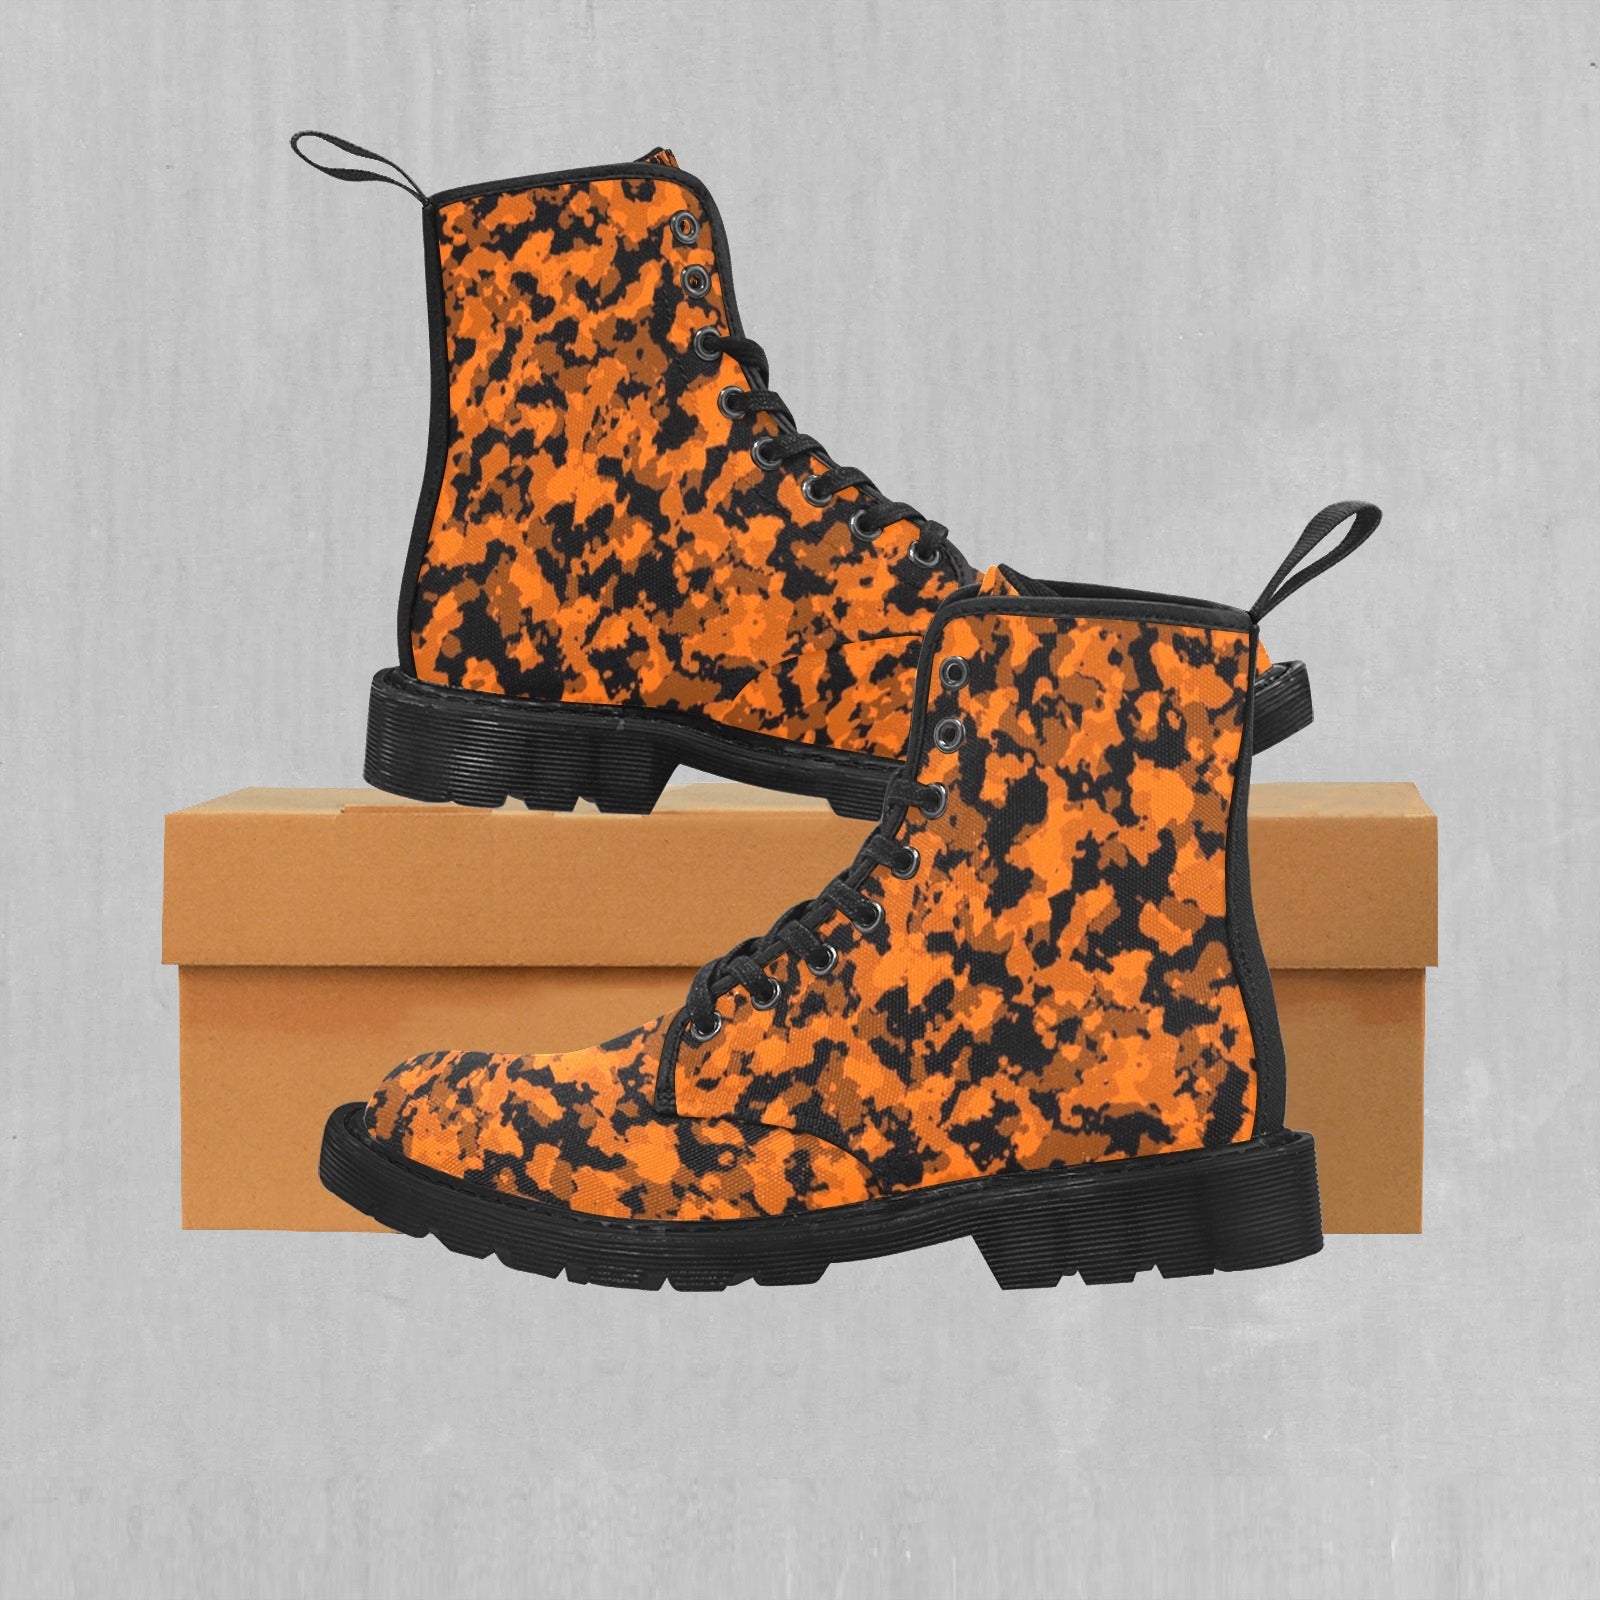 Savage Orange Camo Women's Boots